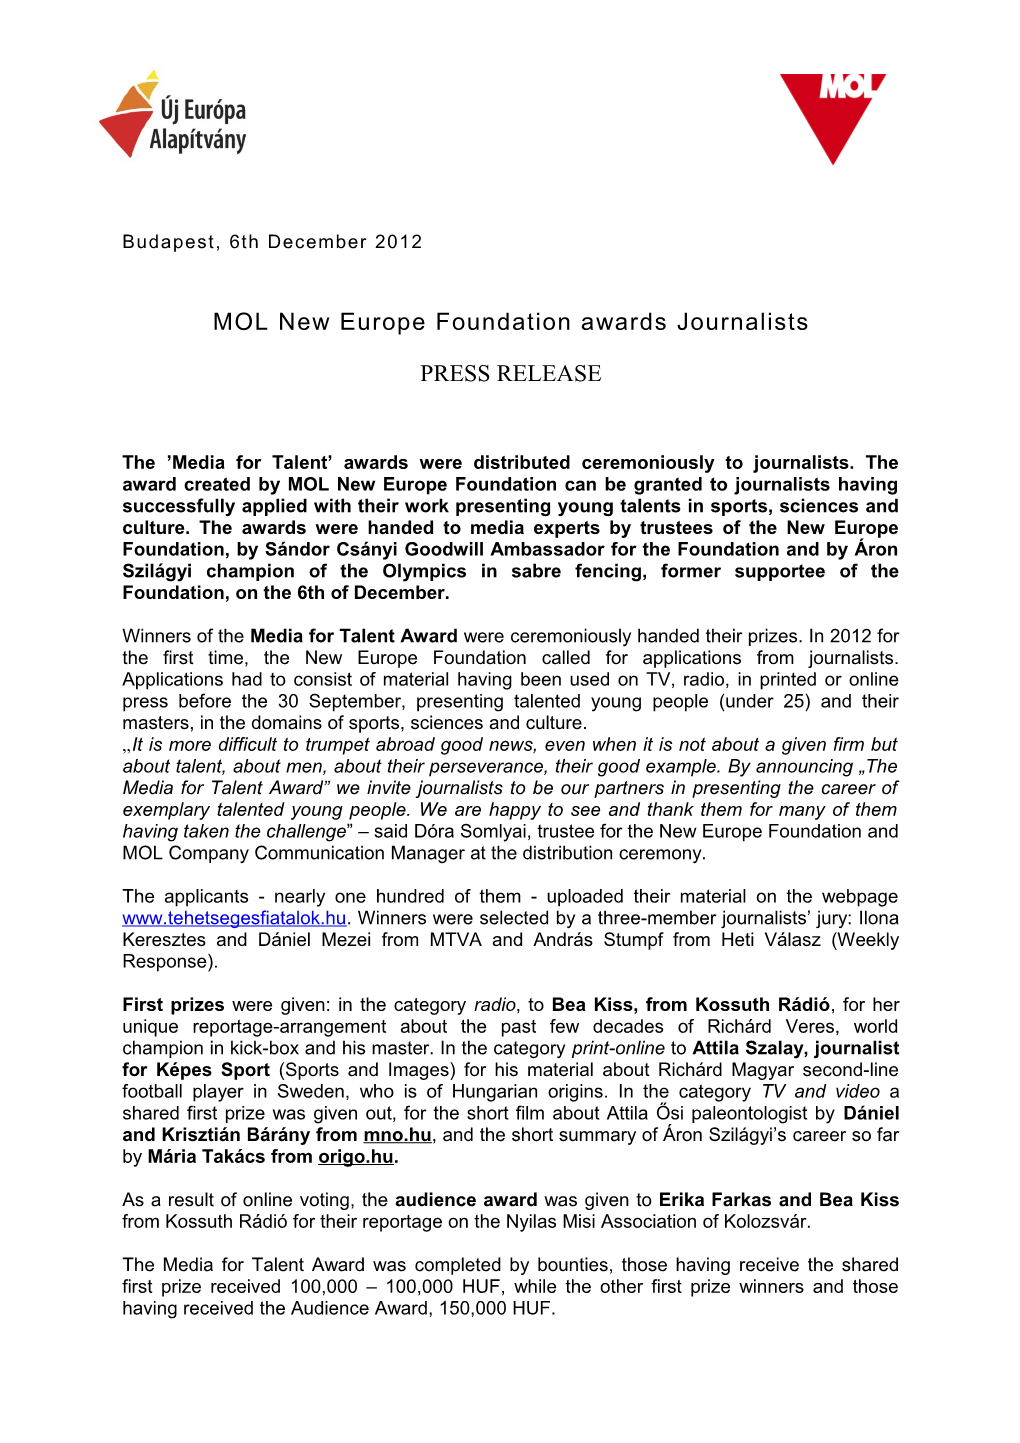 MOL New Europe Foundation Awards Journalists